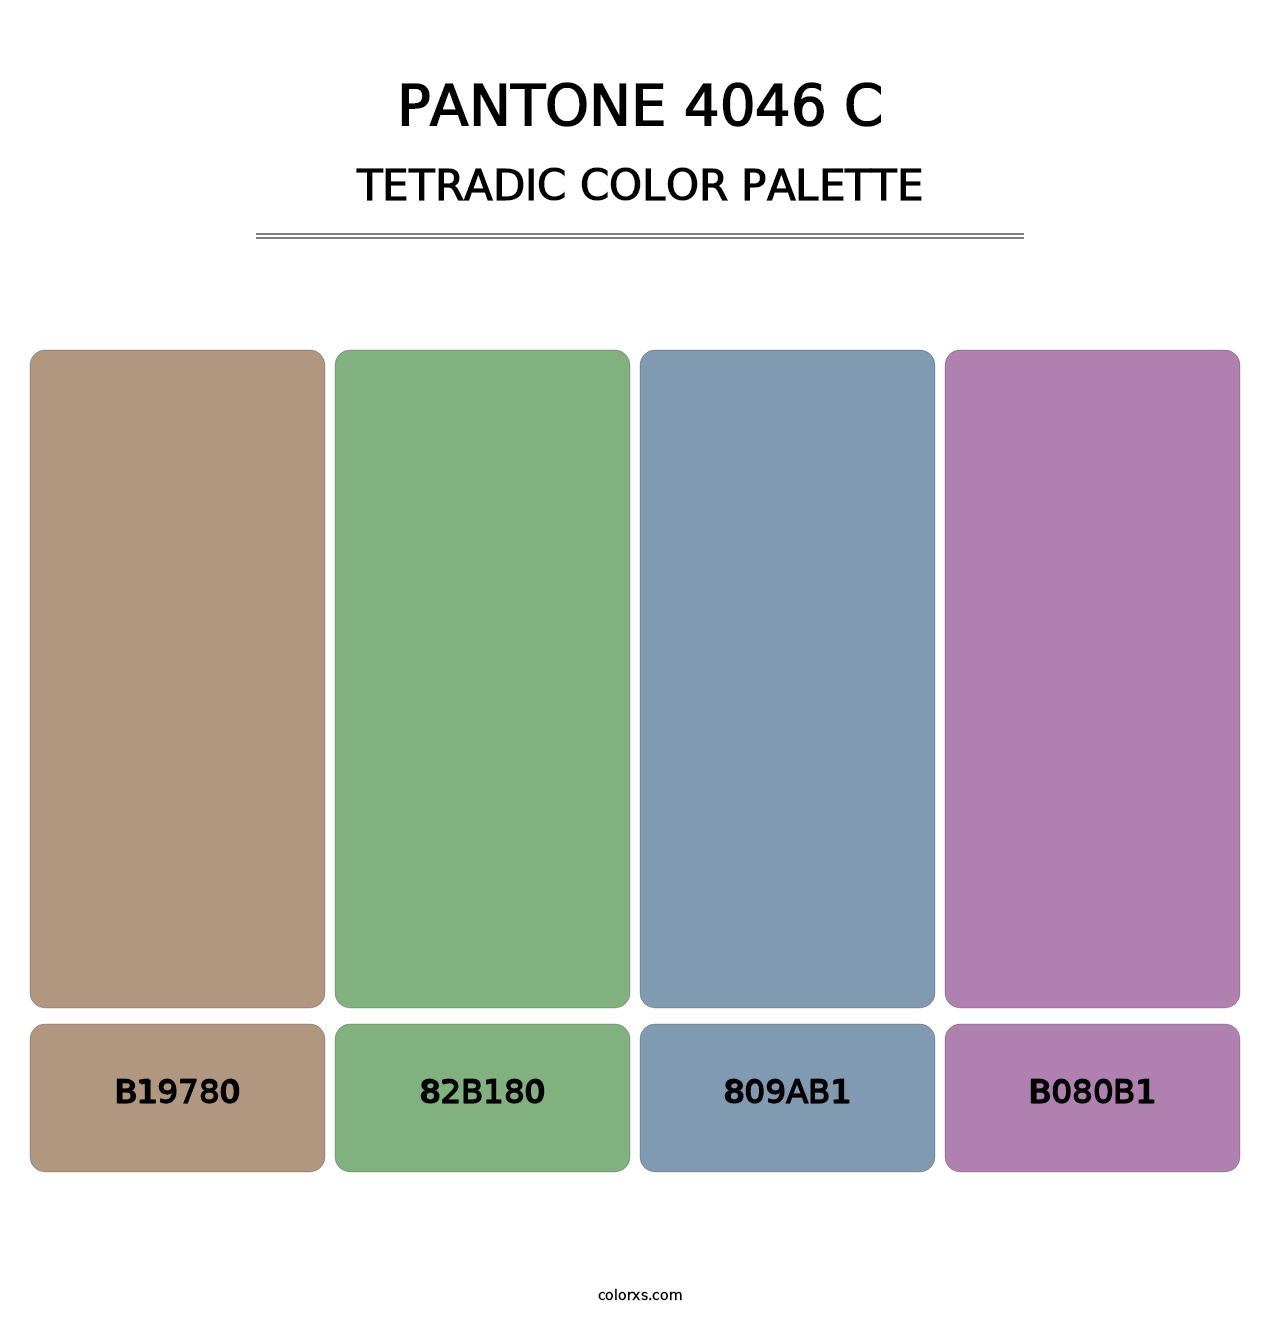 PANTONE 4046 C - Tetradic Color Palette